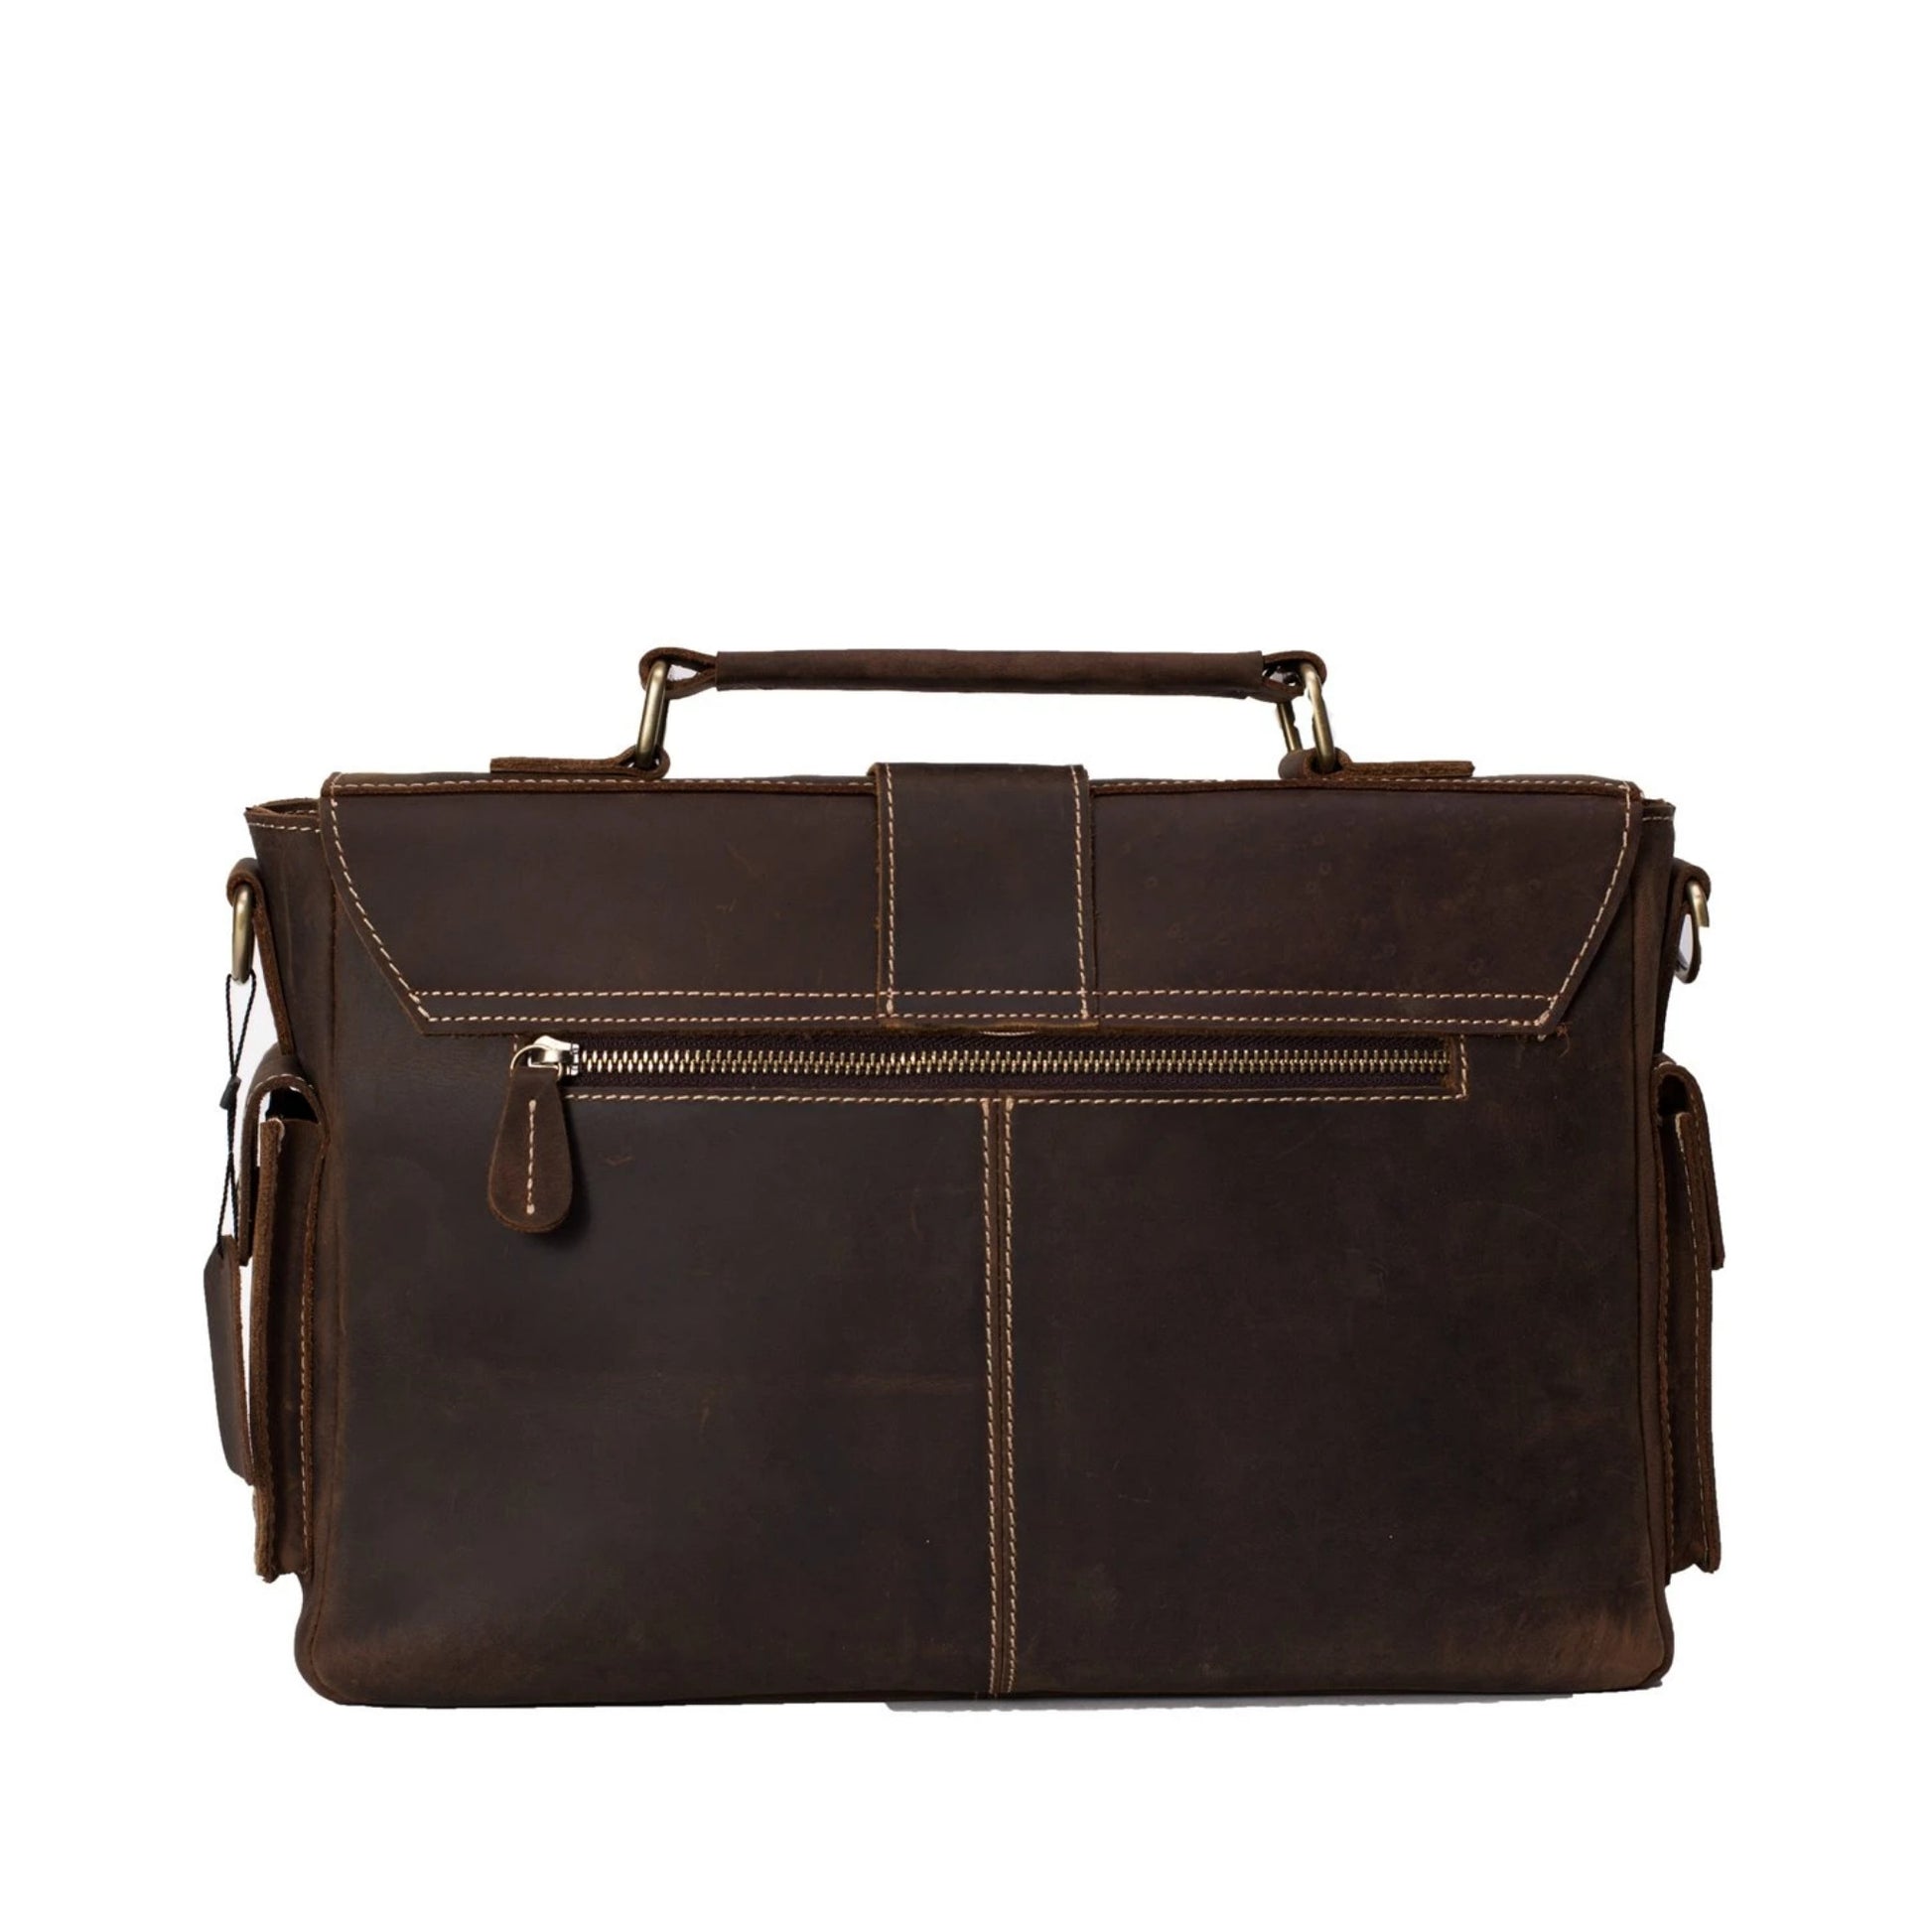 Handmade Genuine Leather Compact Satchel Briefcase - Blue Sebe Handmade Leather Bags